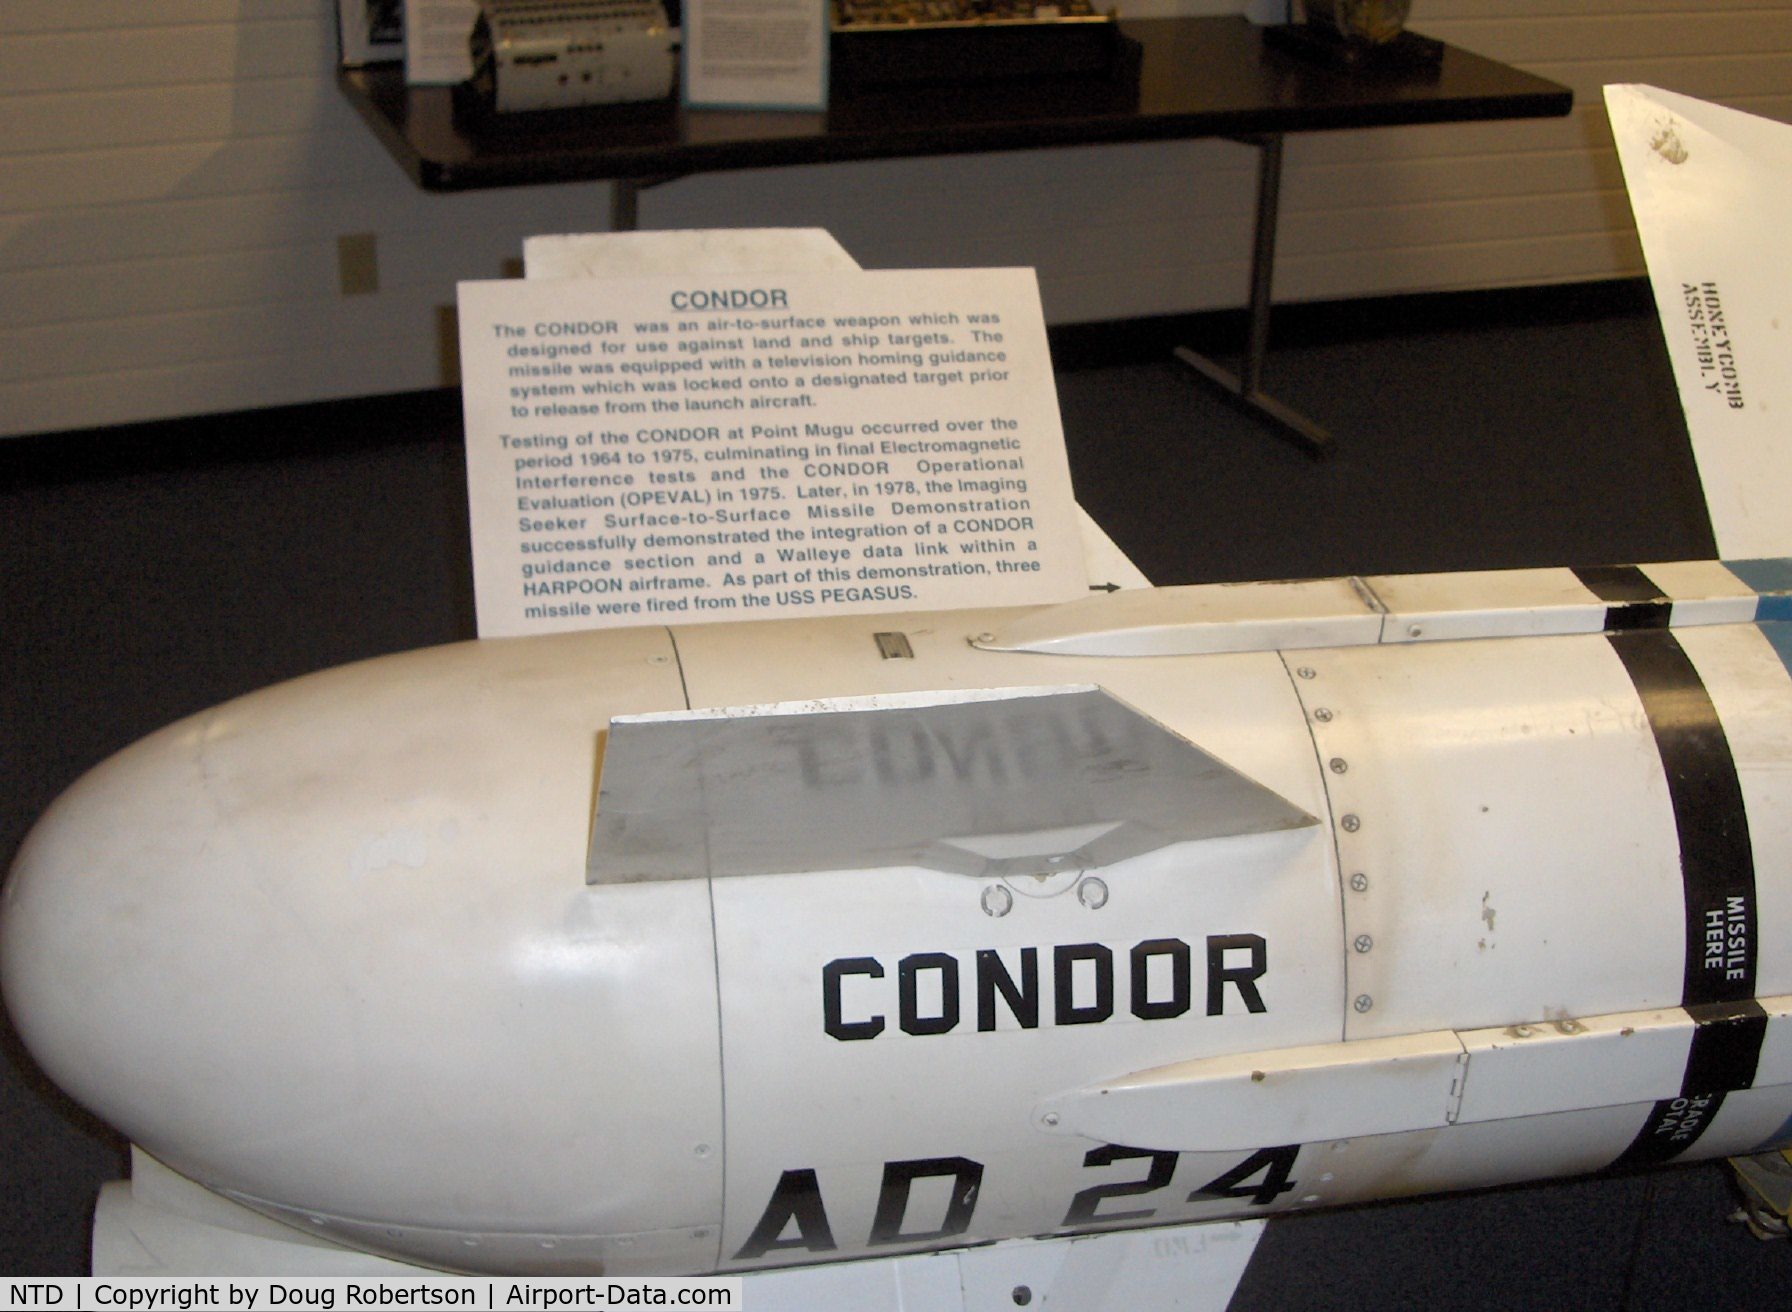 Point Mugu Nas (naval Base Ventura Co) Airport (NTD) - CONDOR missile, air to surface television homing guidance